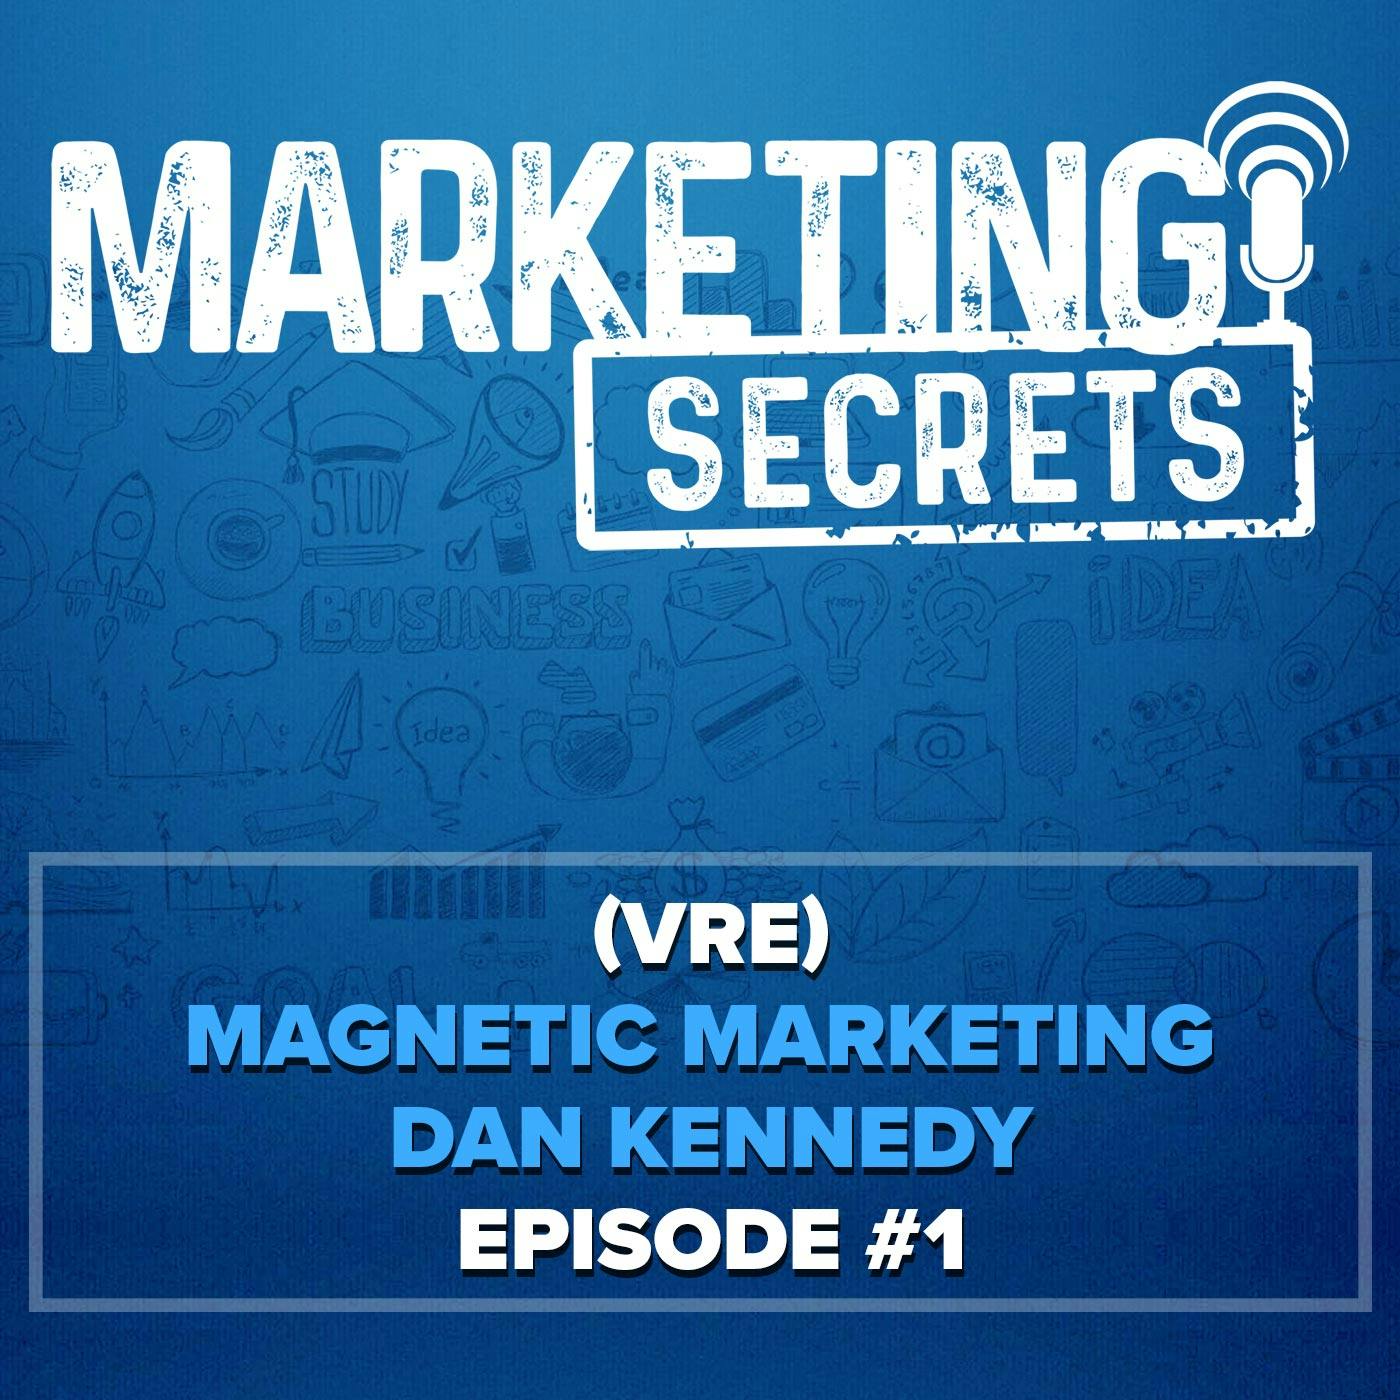 S2E4 - (VRE) Magnetic Marketing / Dan Kennedy - Episode #1